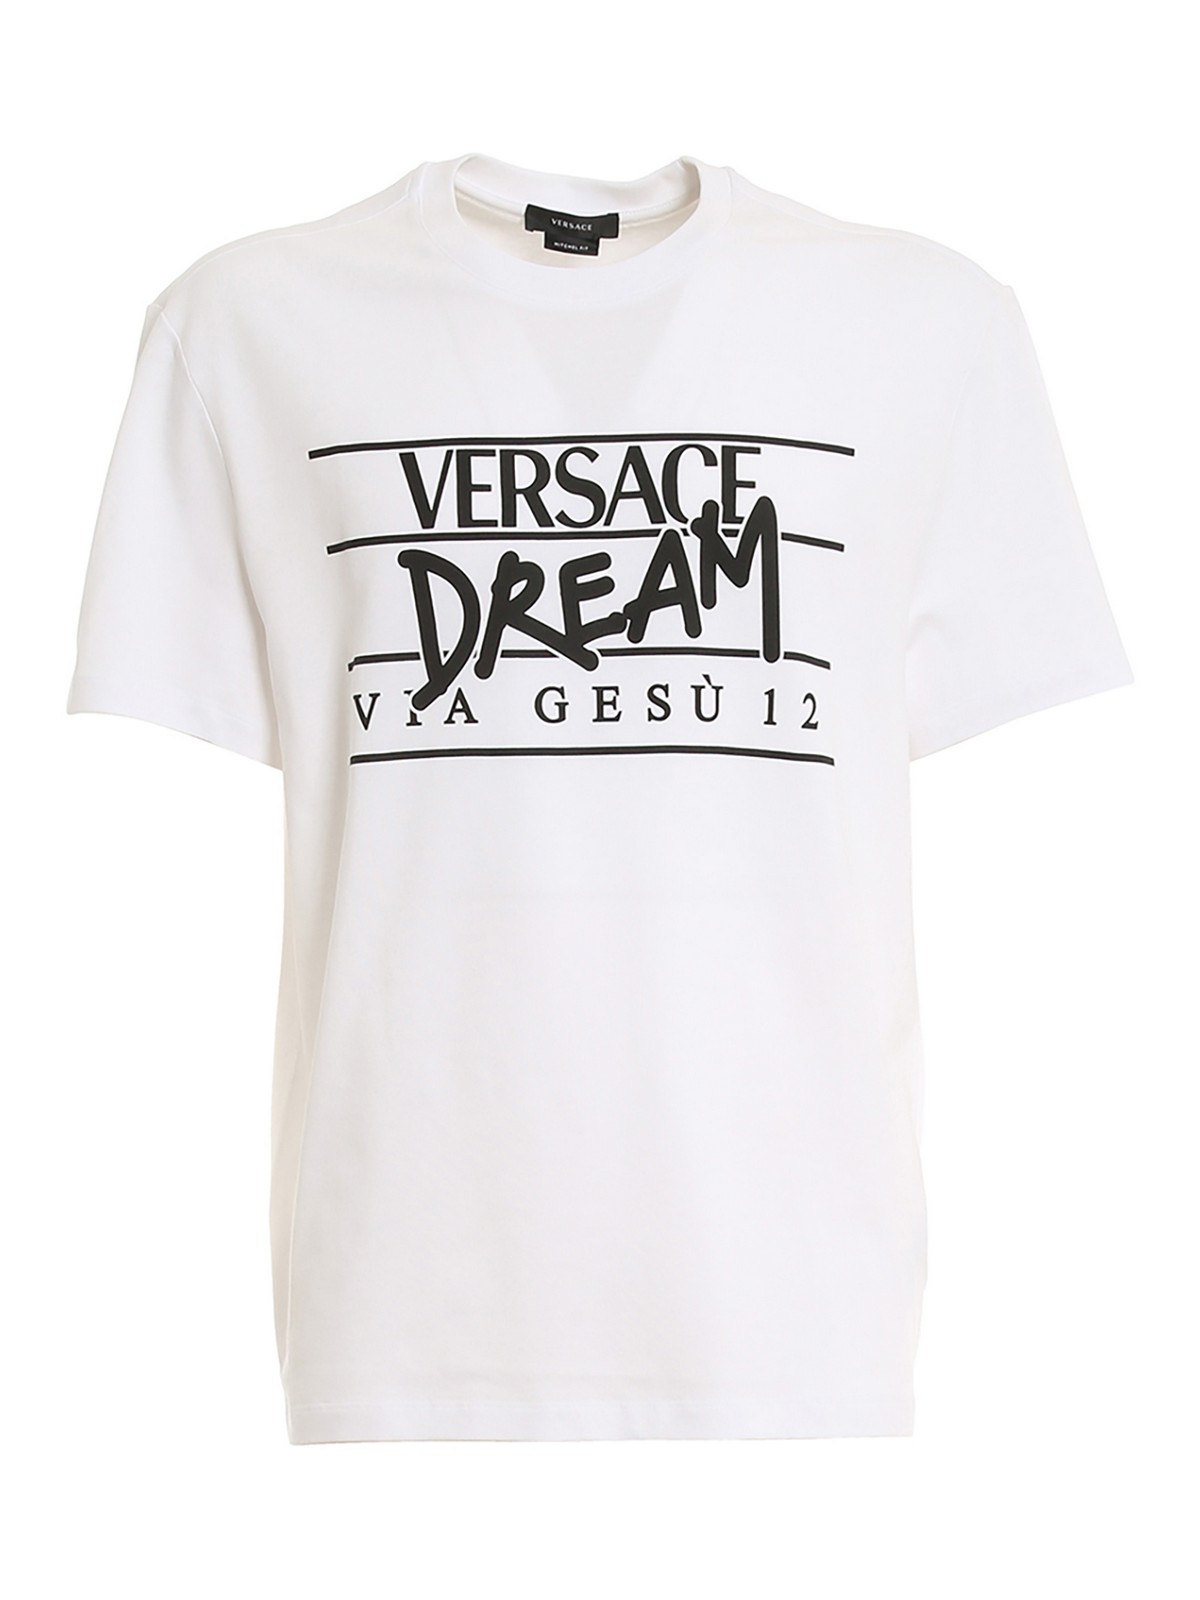 T-shirts Versace - Versace Dream T-shirt - 10057831A040251W000 | iKRIX.com